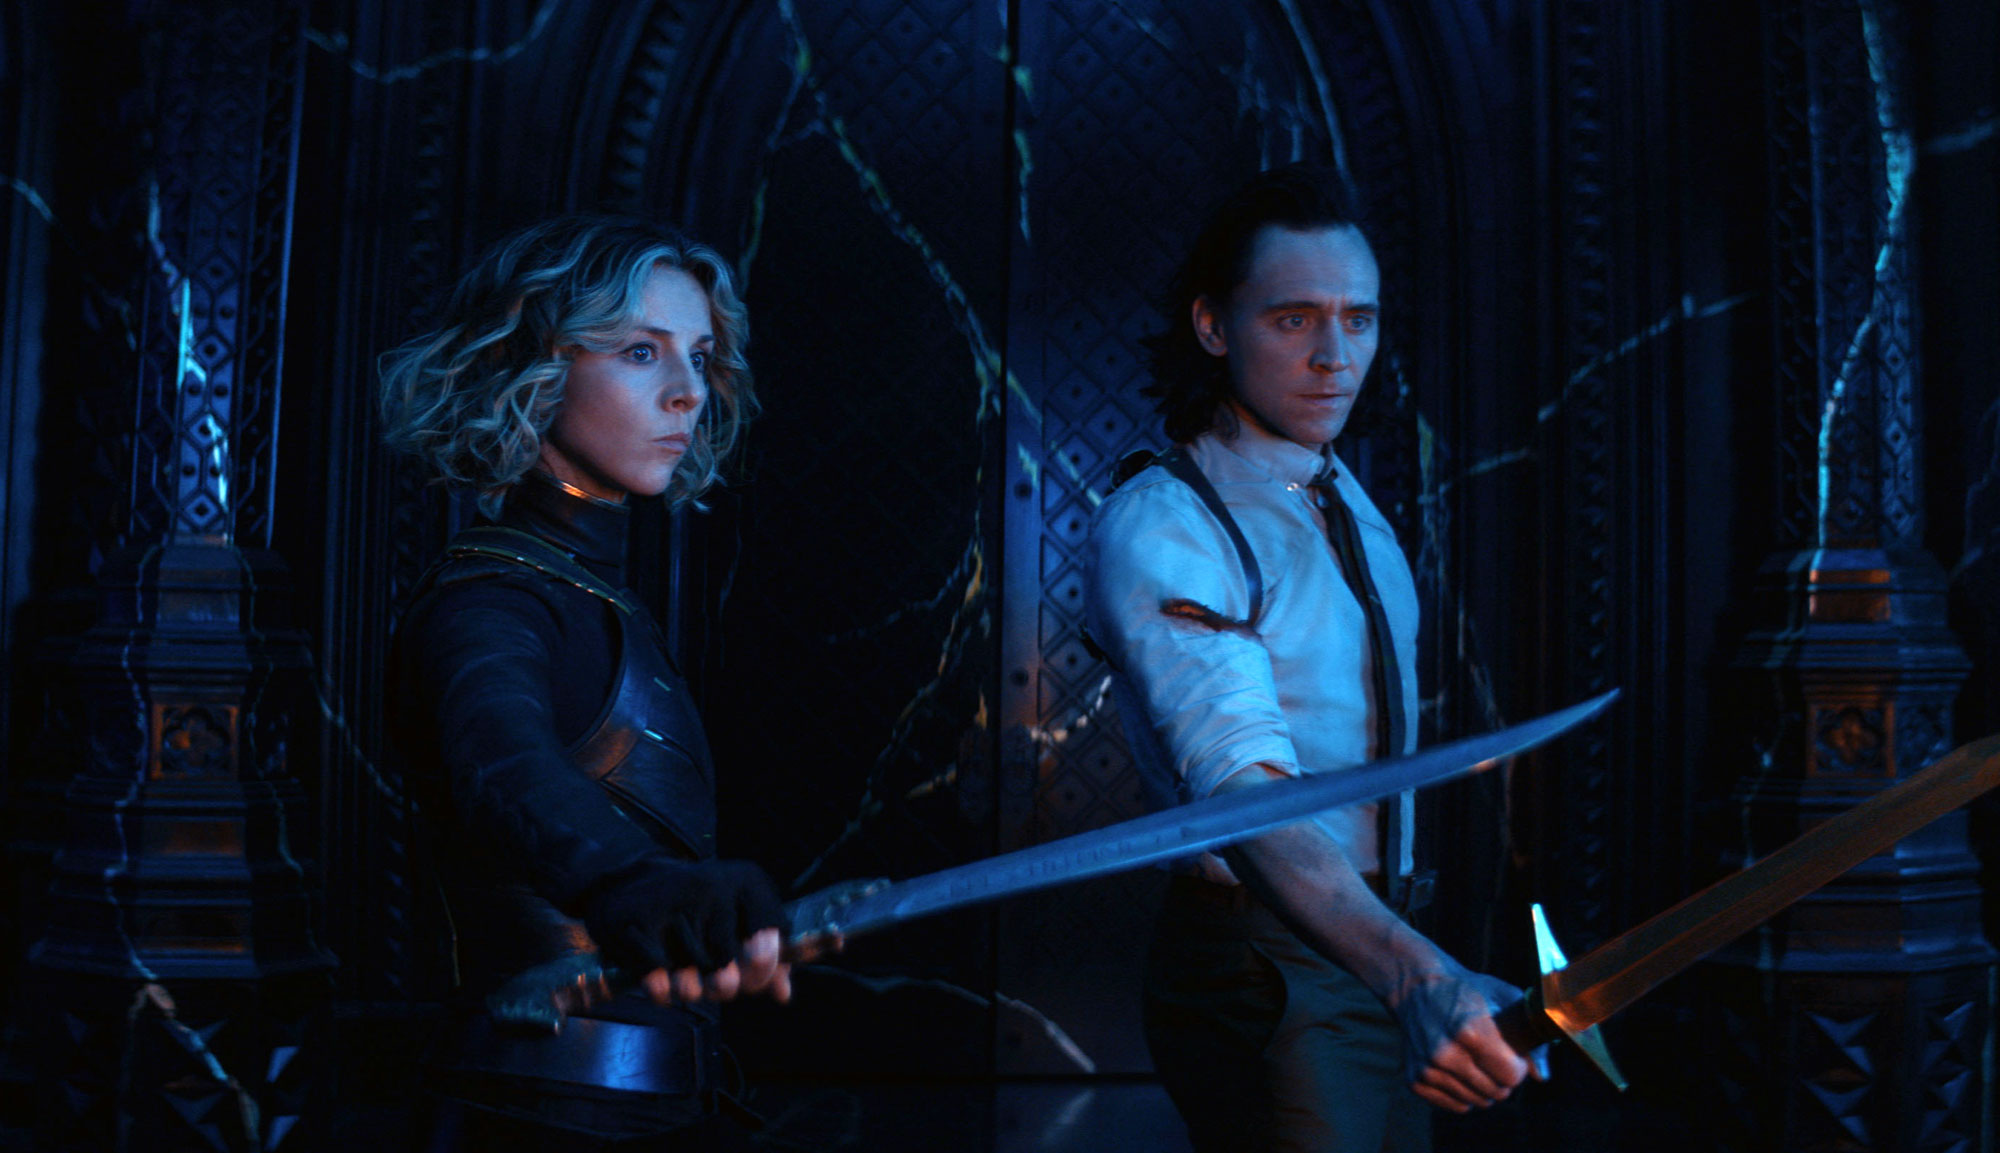 Tom Hiddleston and Sophia Di Martino in "Loki"